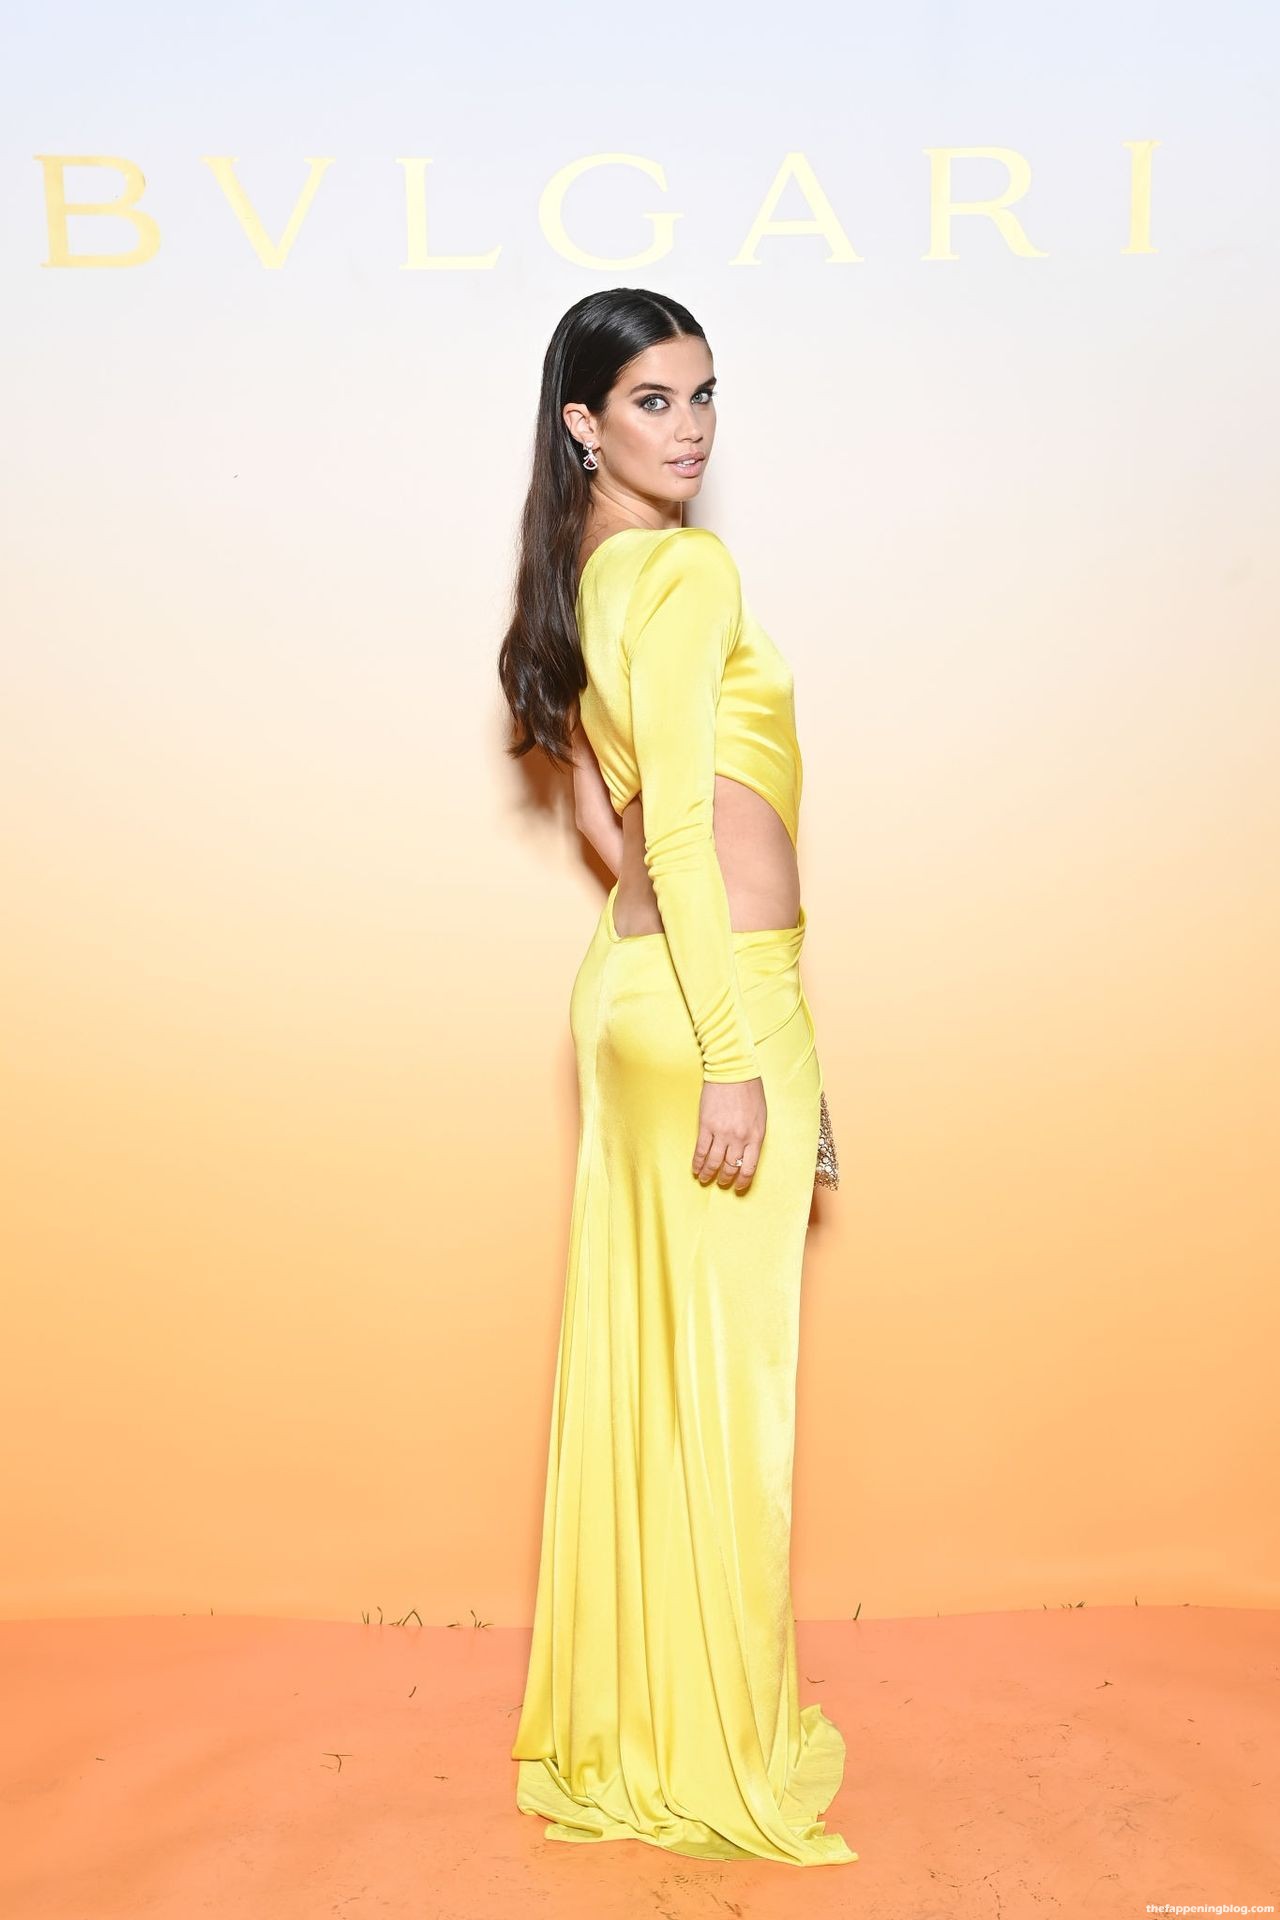 Sara Sampaio Poses in a Glamorous Lemon A-symmetrical Gown at the Bulgari Event (14 Photos)